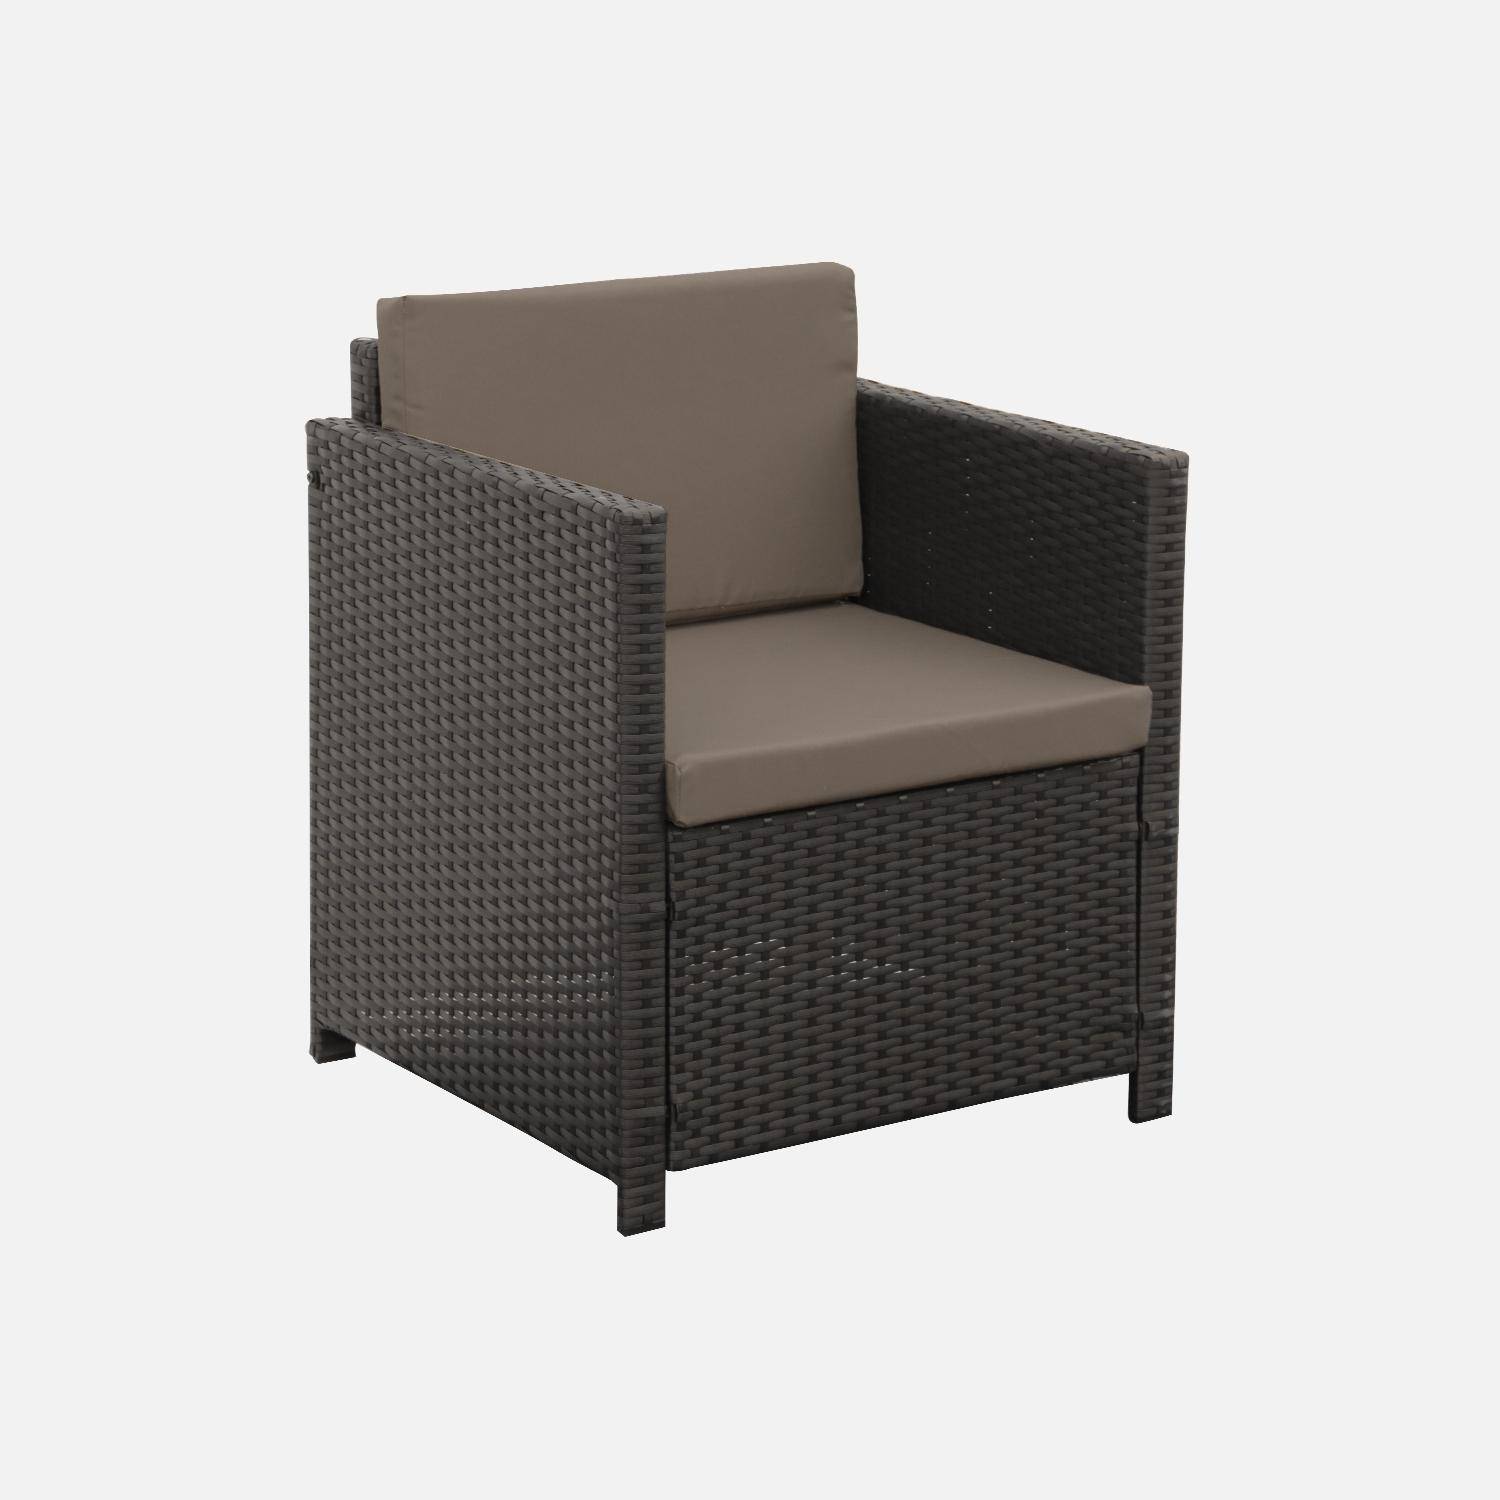 4-seater polyrattan garden sofa set - sofa, 2 armchairs, coffee table - Perugia - Brown rattan, Chocolate cushions Photo4